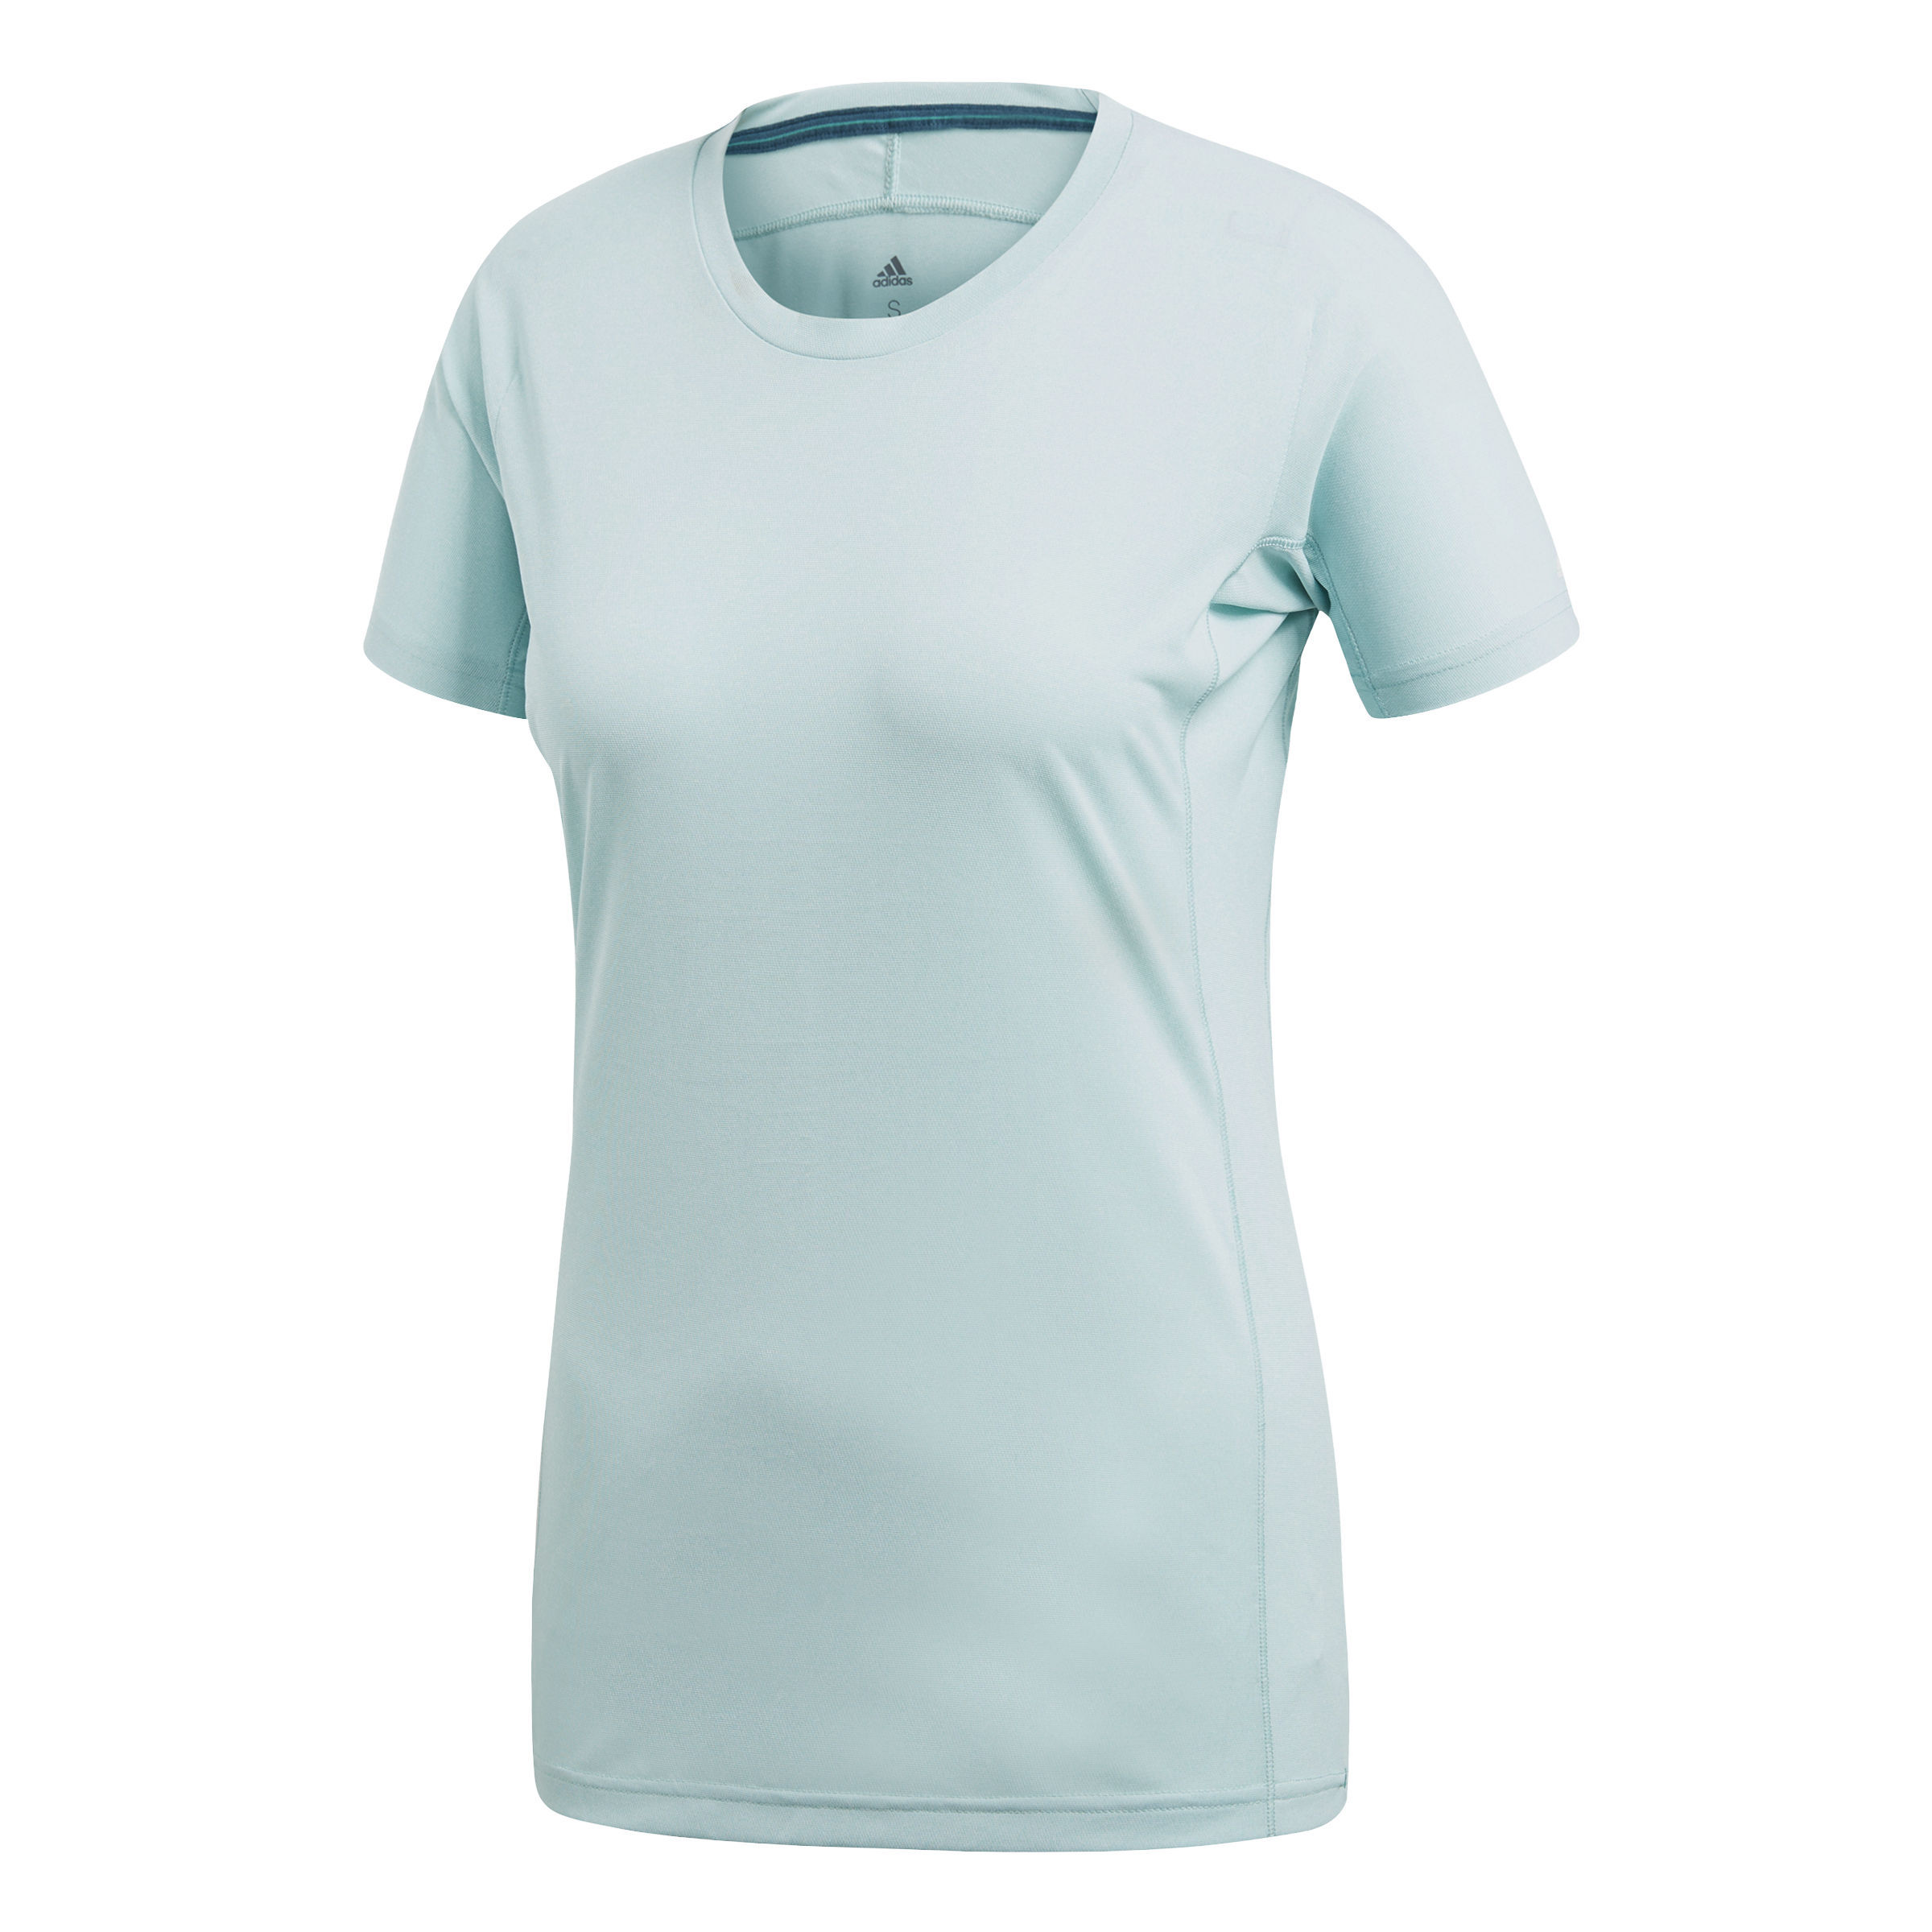 Adidas Outdoor Agravic Parley Tee Shirt Women S Cf4686 M 55